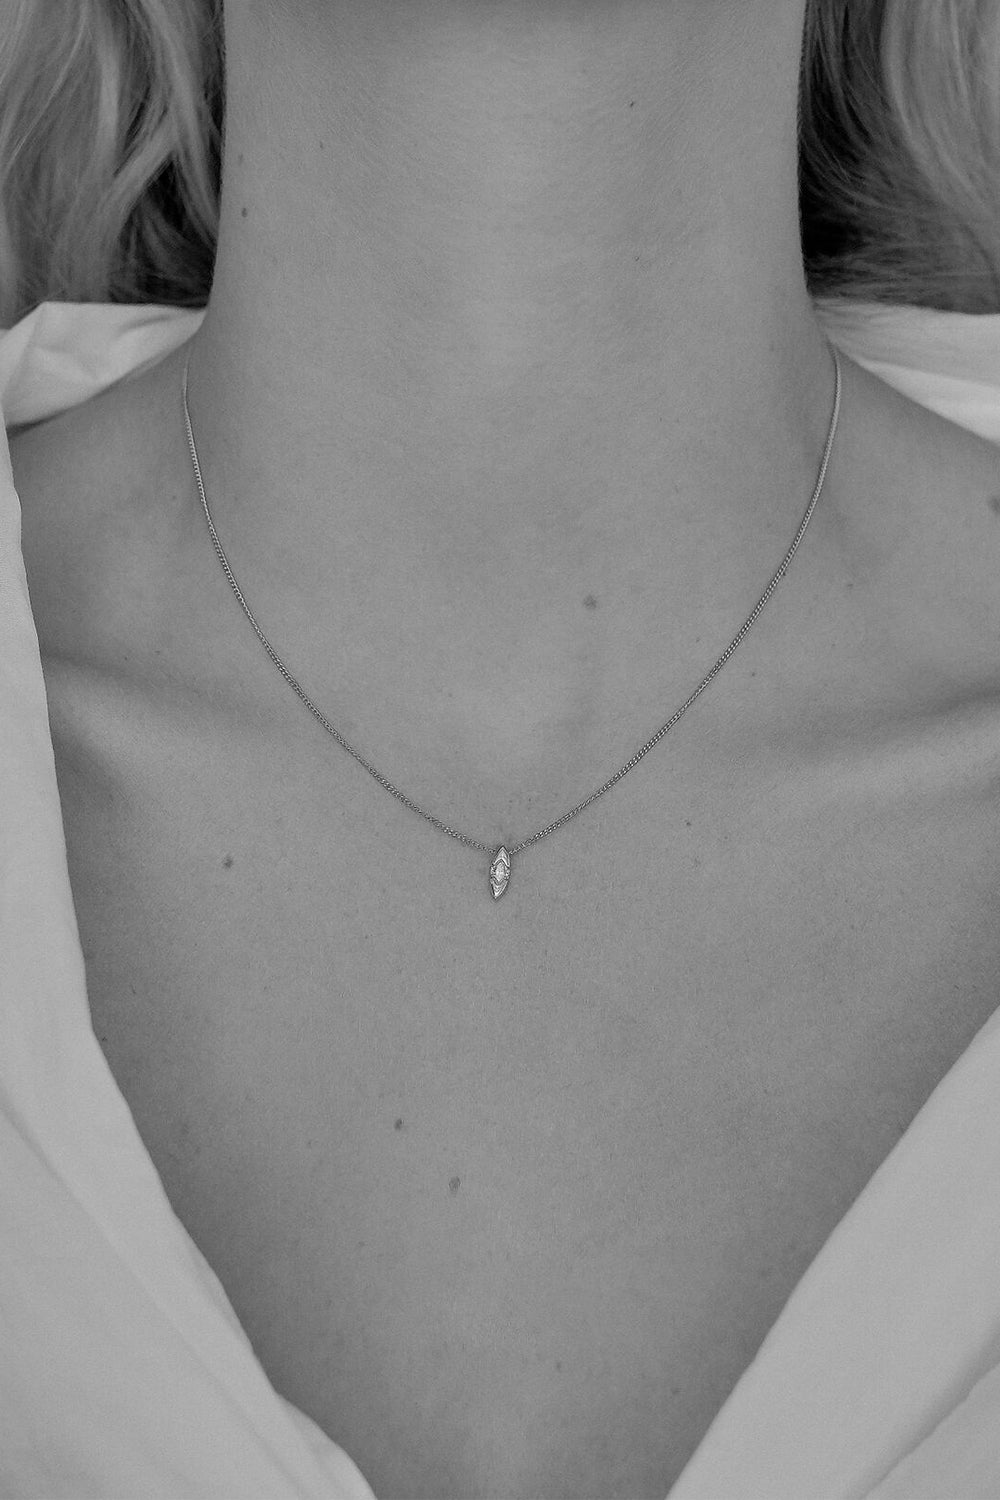 Mini Marquise Diamond Necklace | White Gold